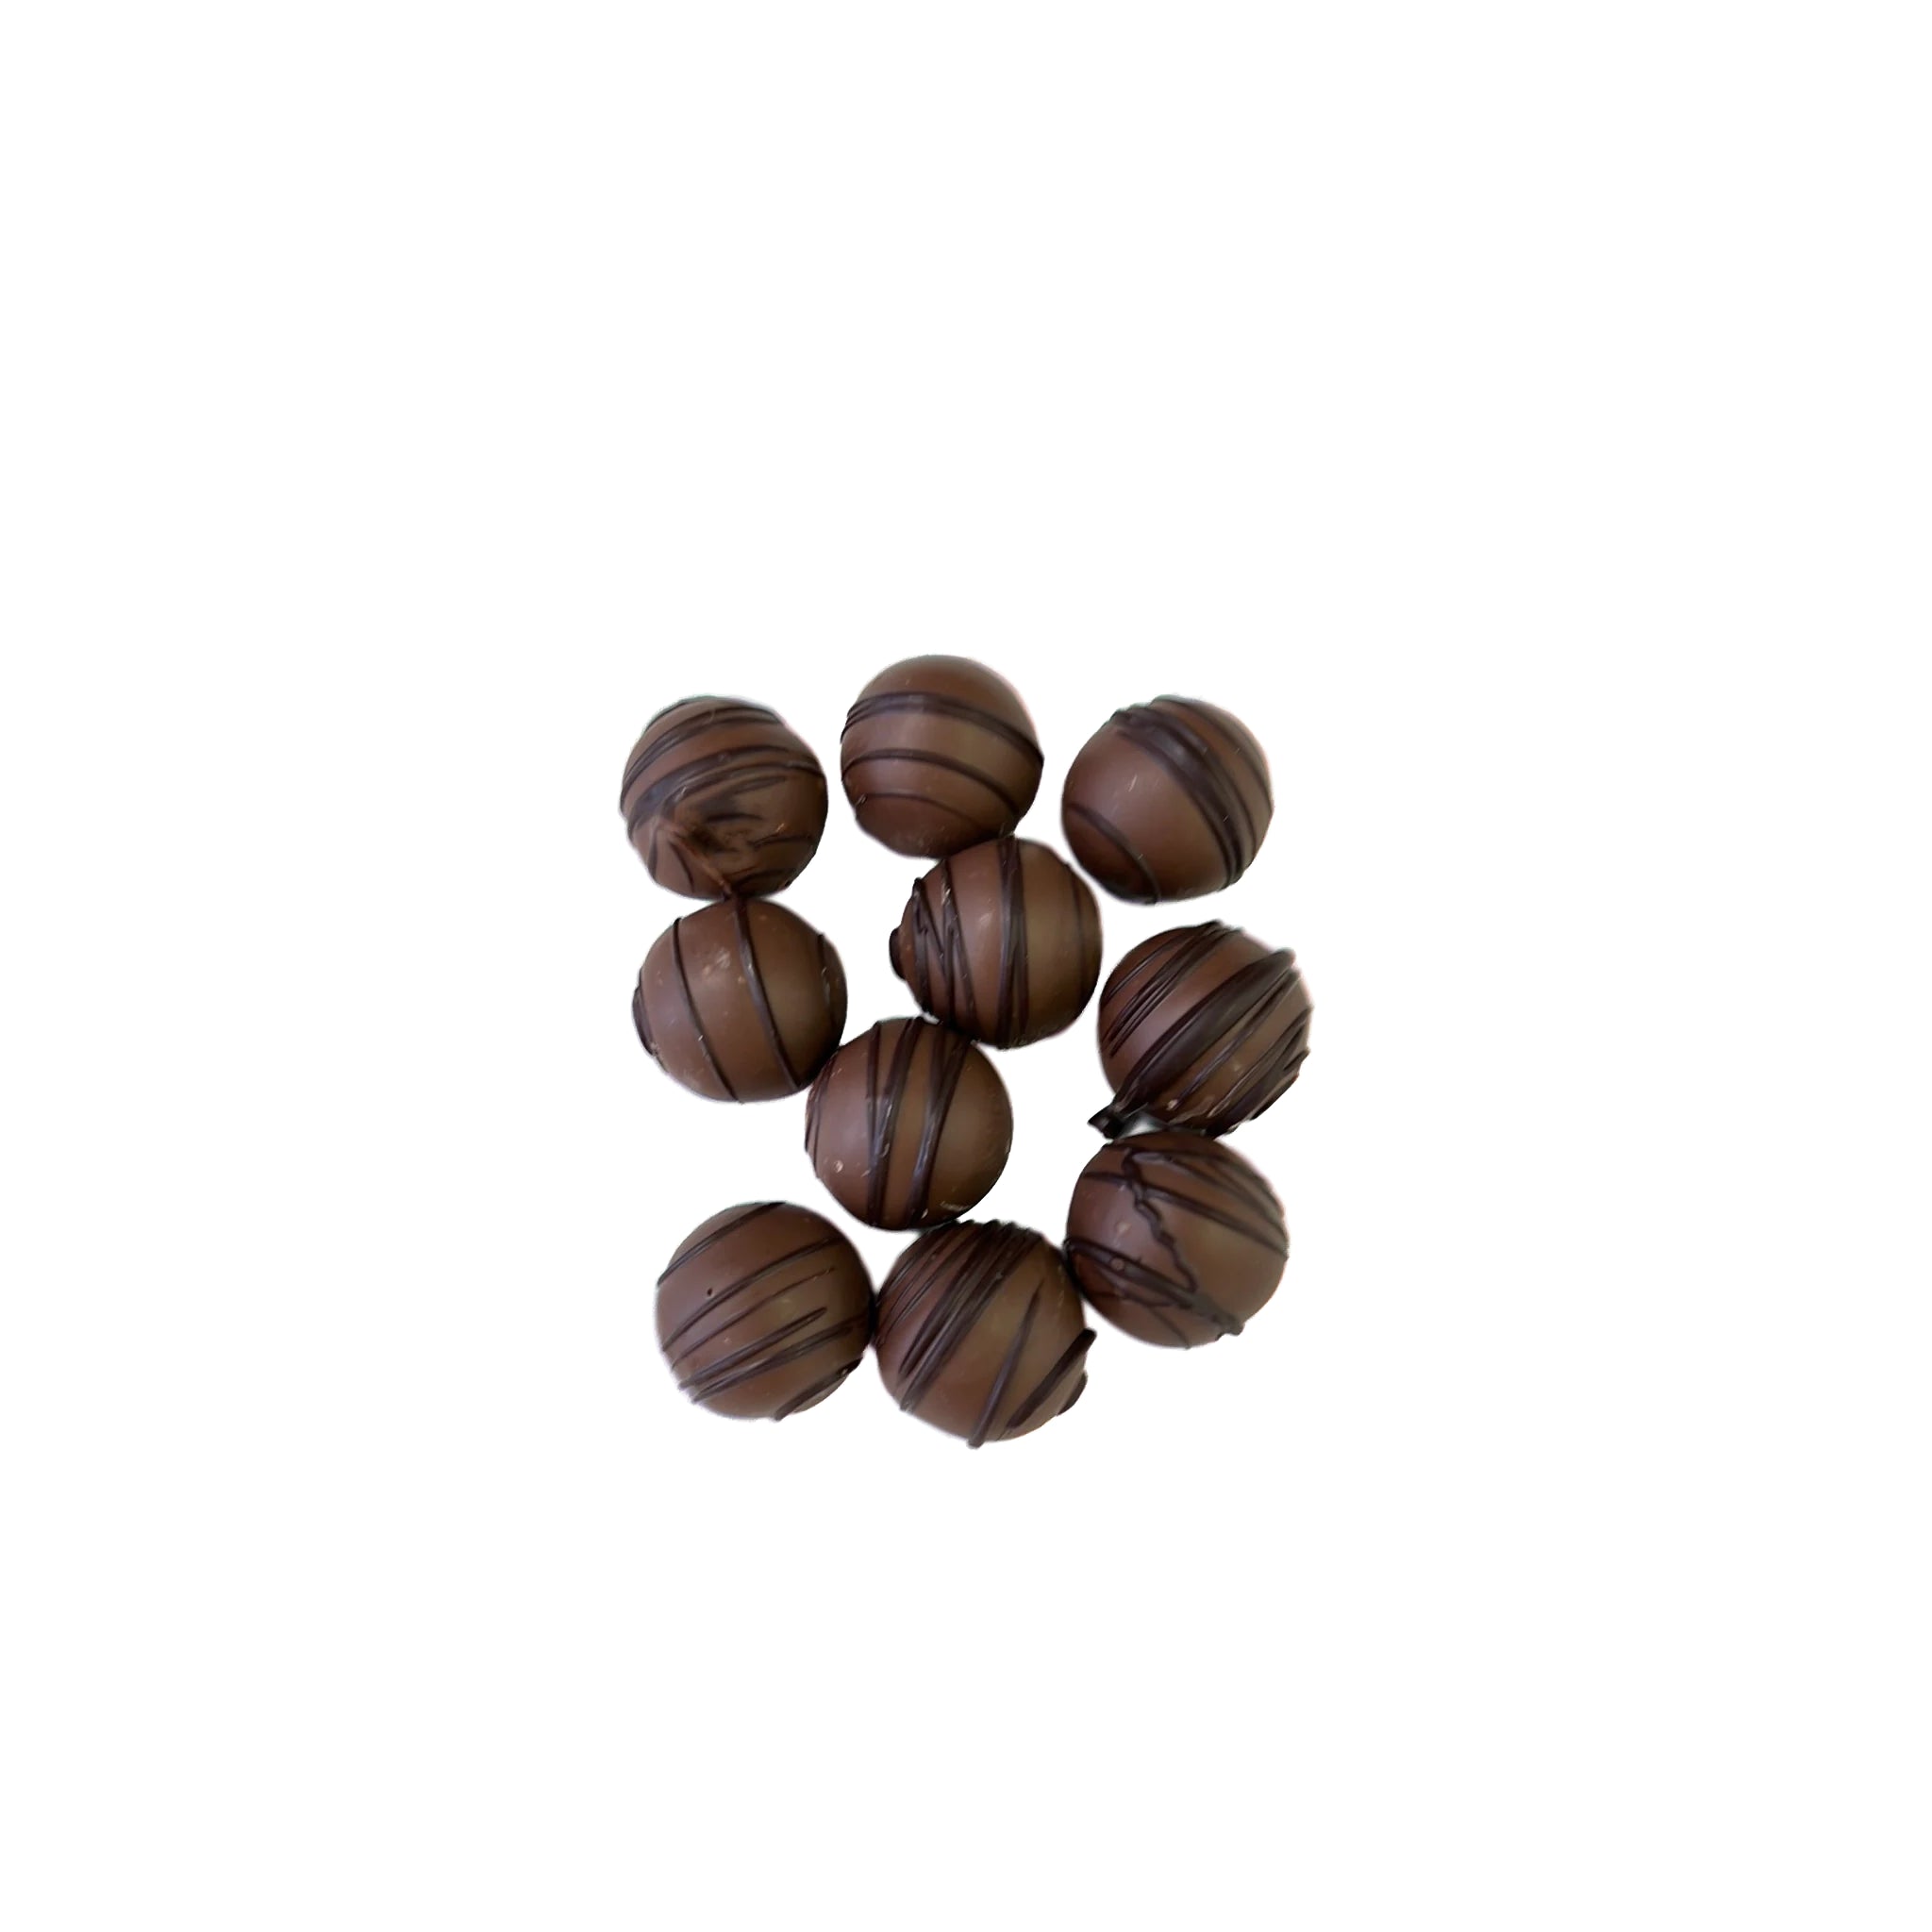 Round marble size chocolates in milk chocolate with dark chocolate stripes 